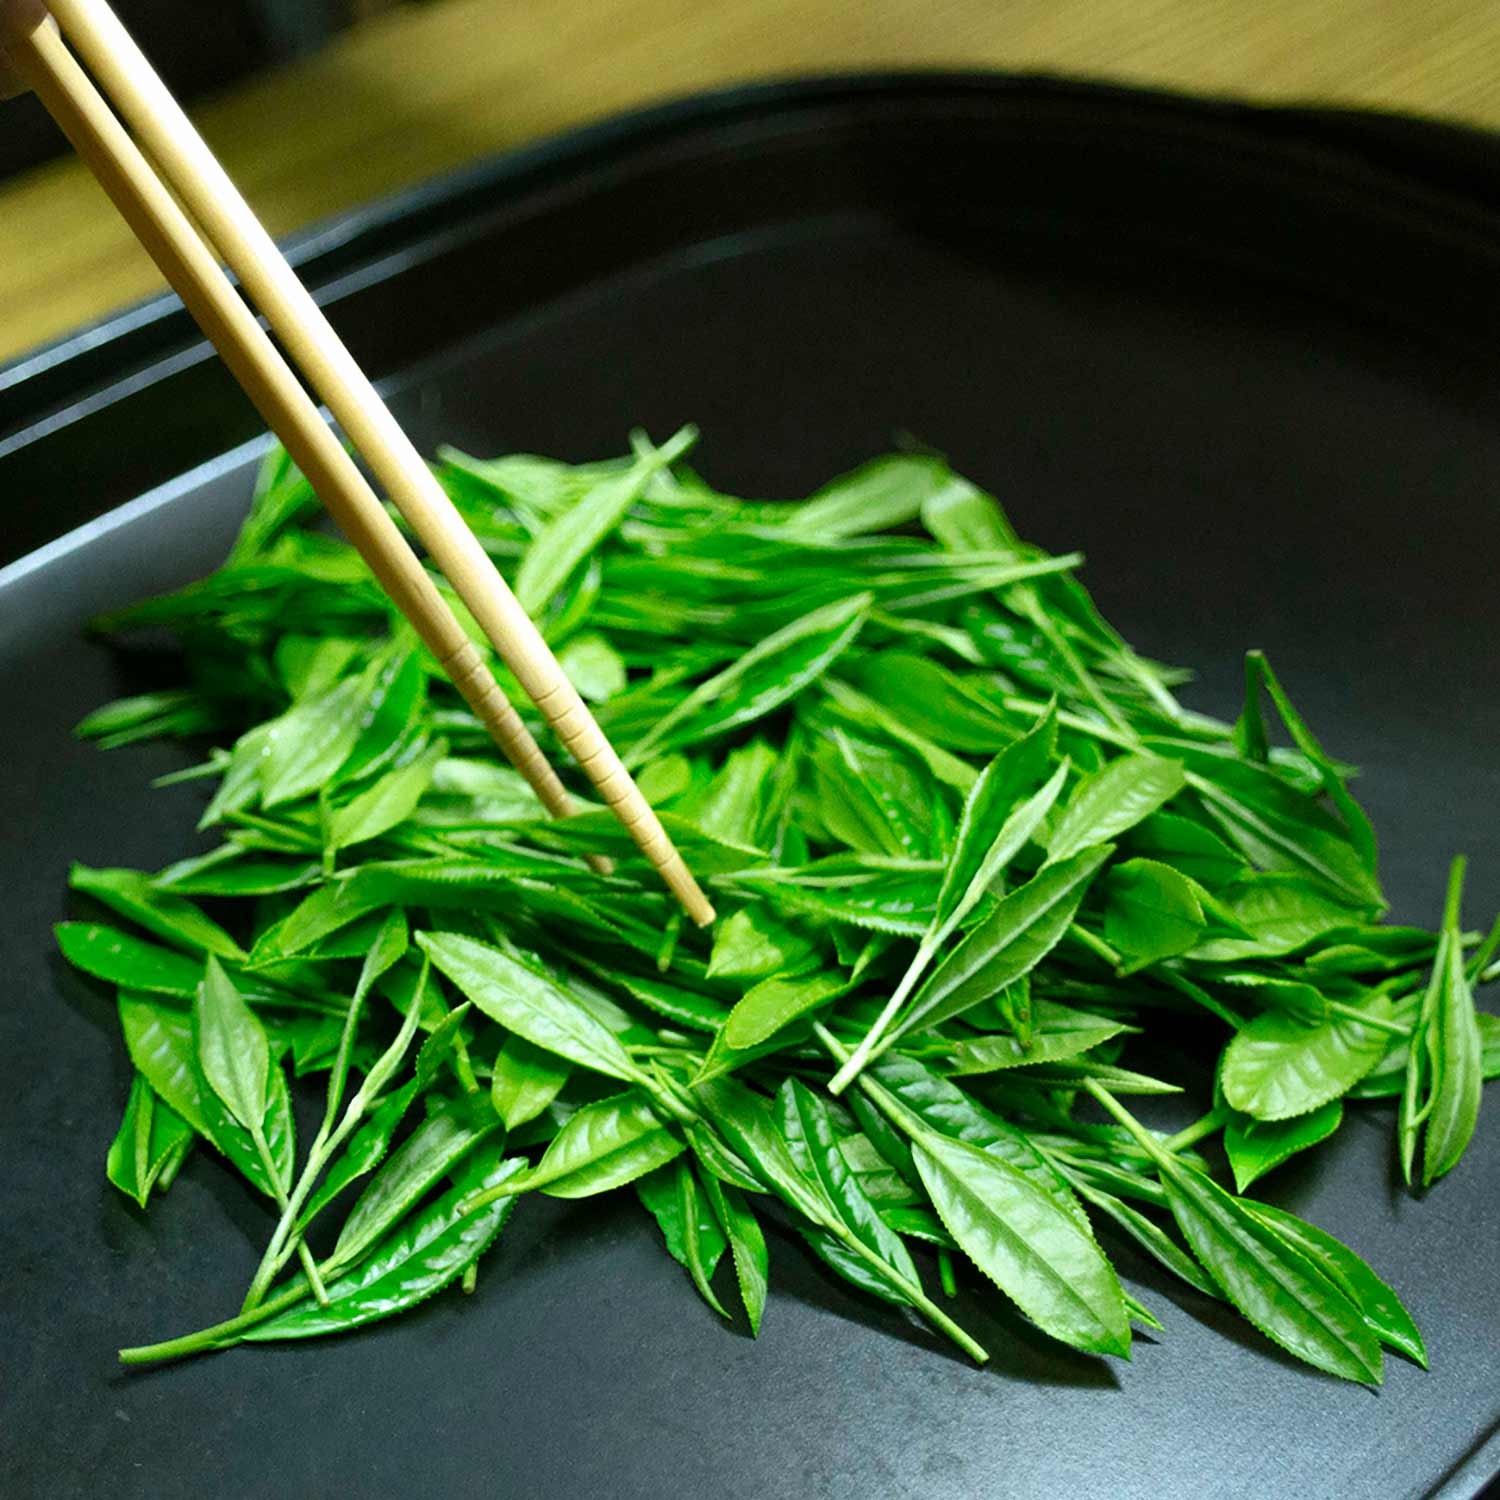 【Re:leaf Record】生葉から煎茶や紅茶を作ってみよう